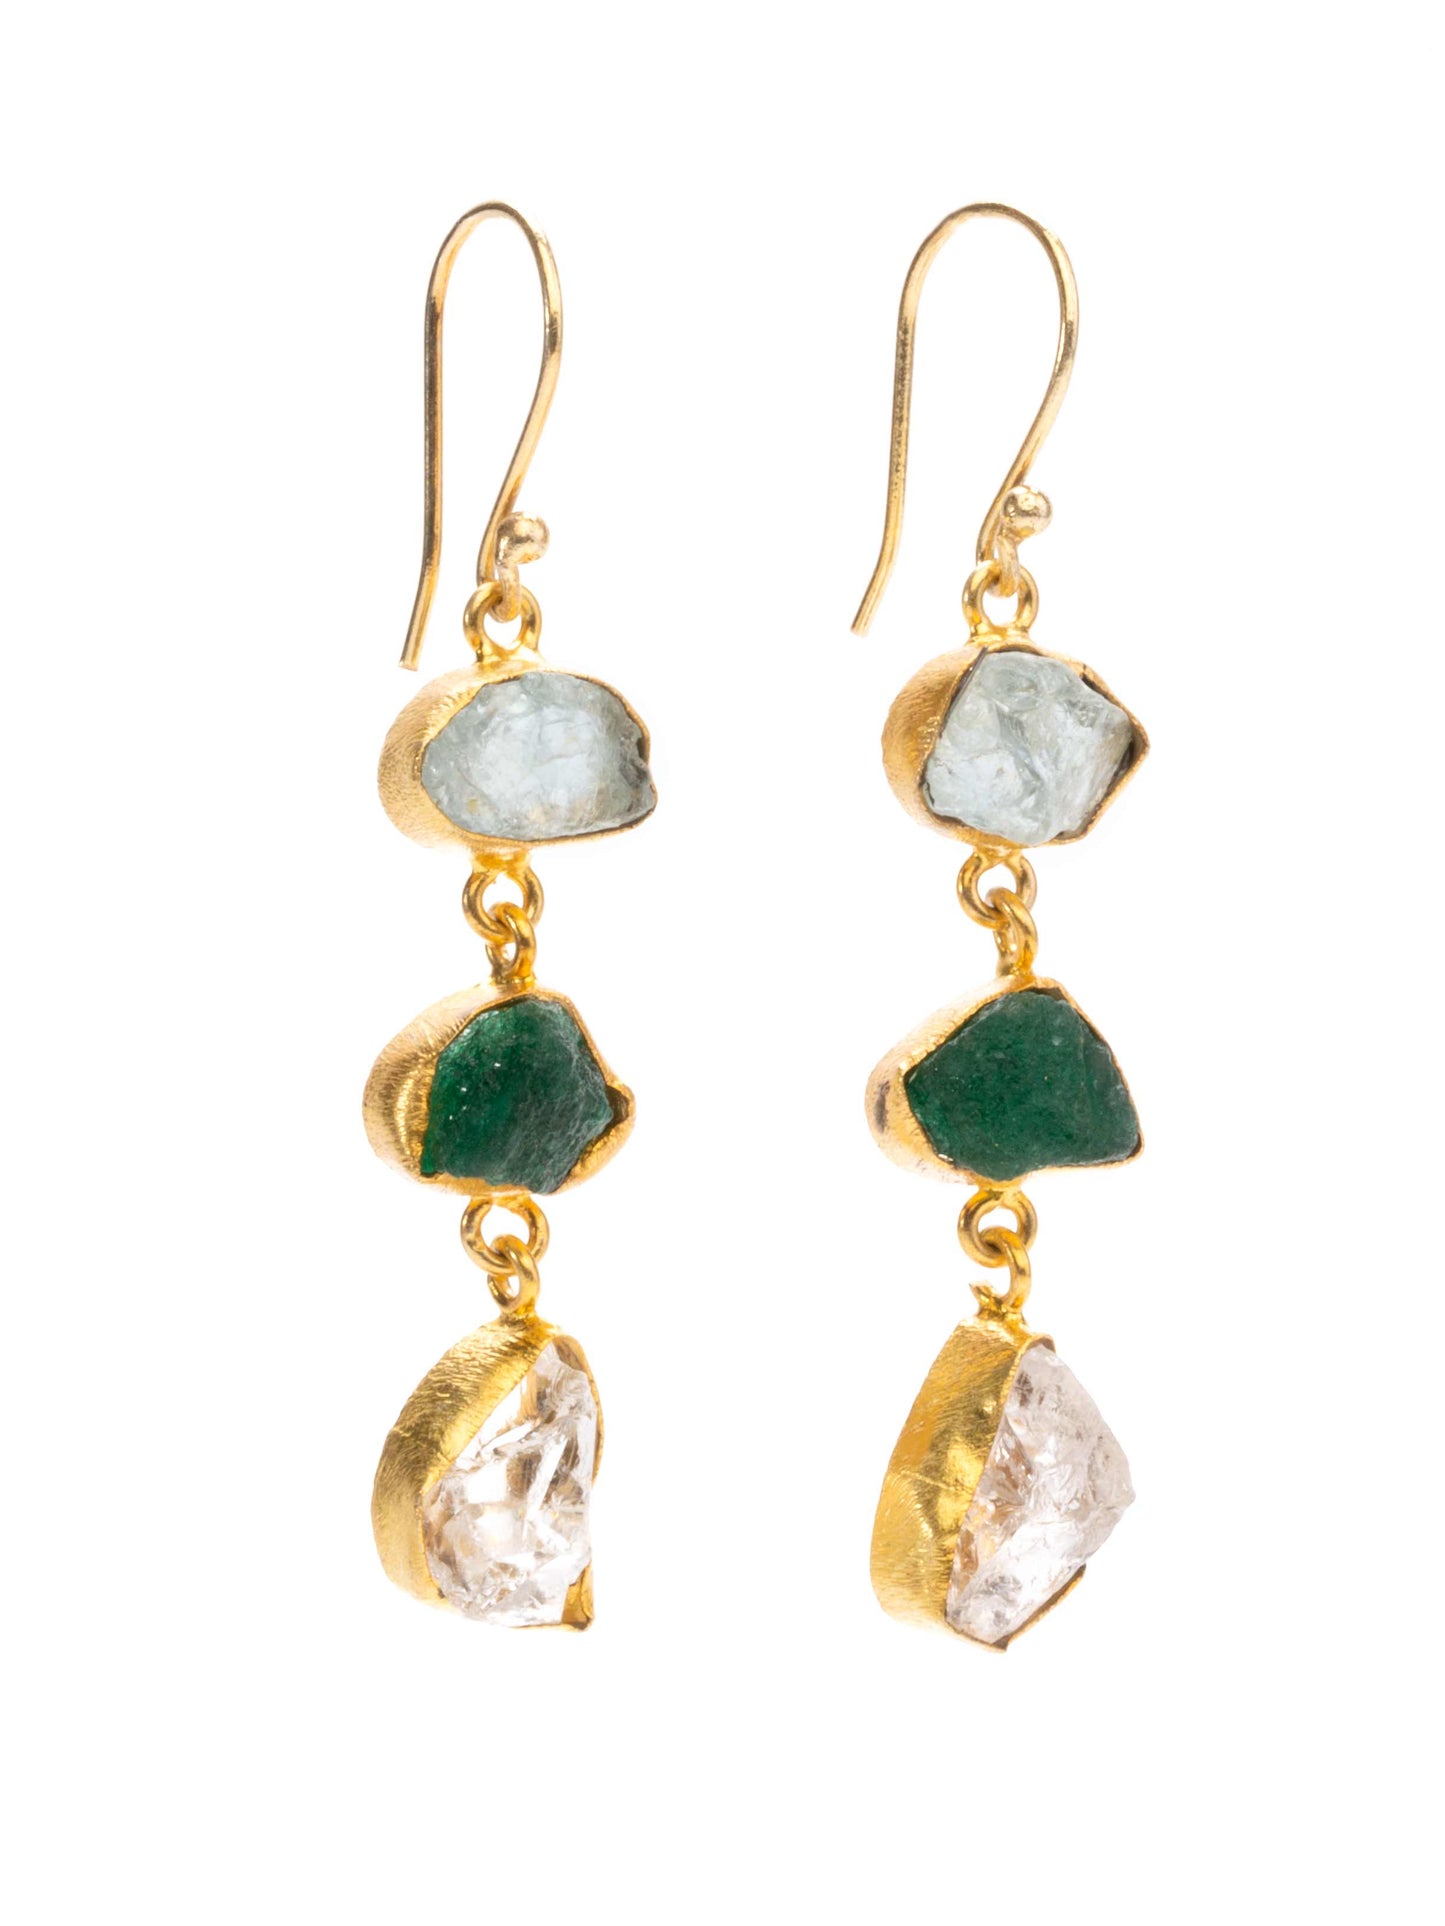 Gold Luxe earrings - triple drop gems aqua marine, aventurine  & quartz